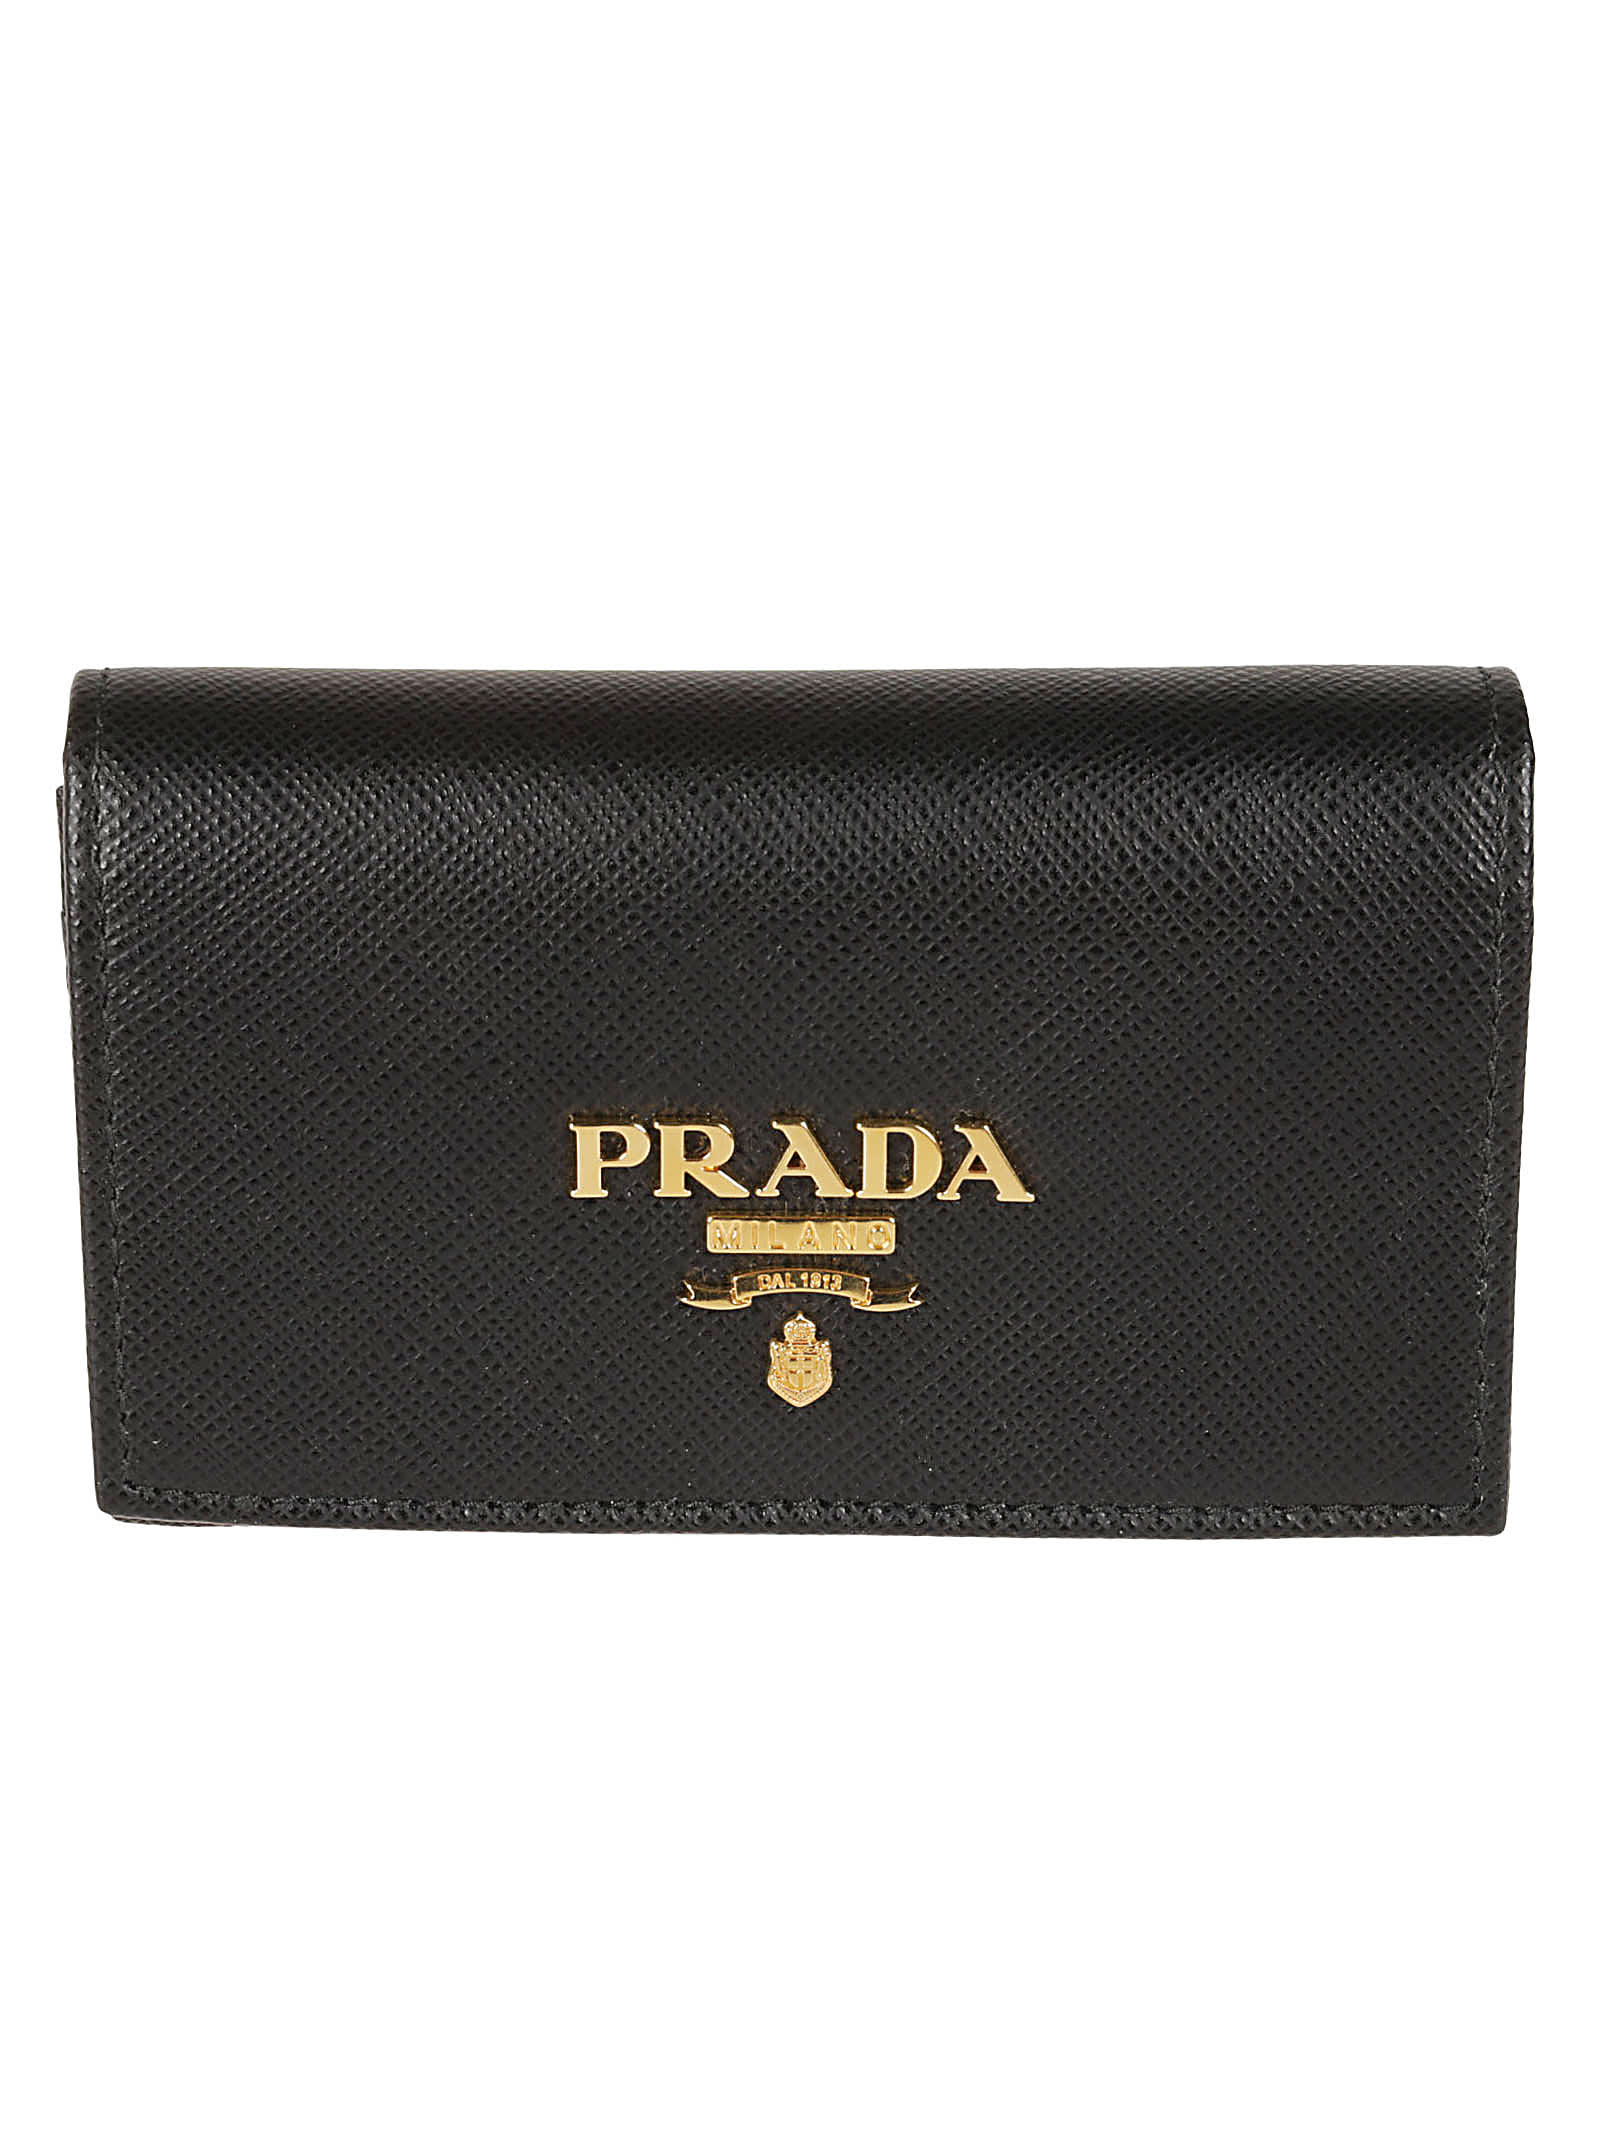 Prada Logo Flap Wallet